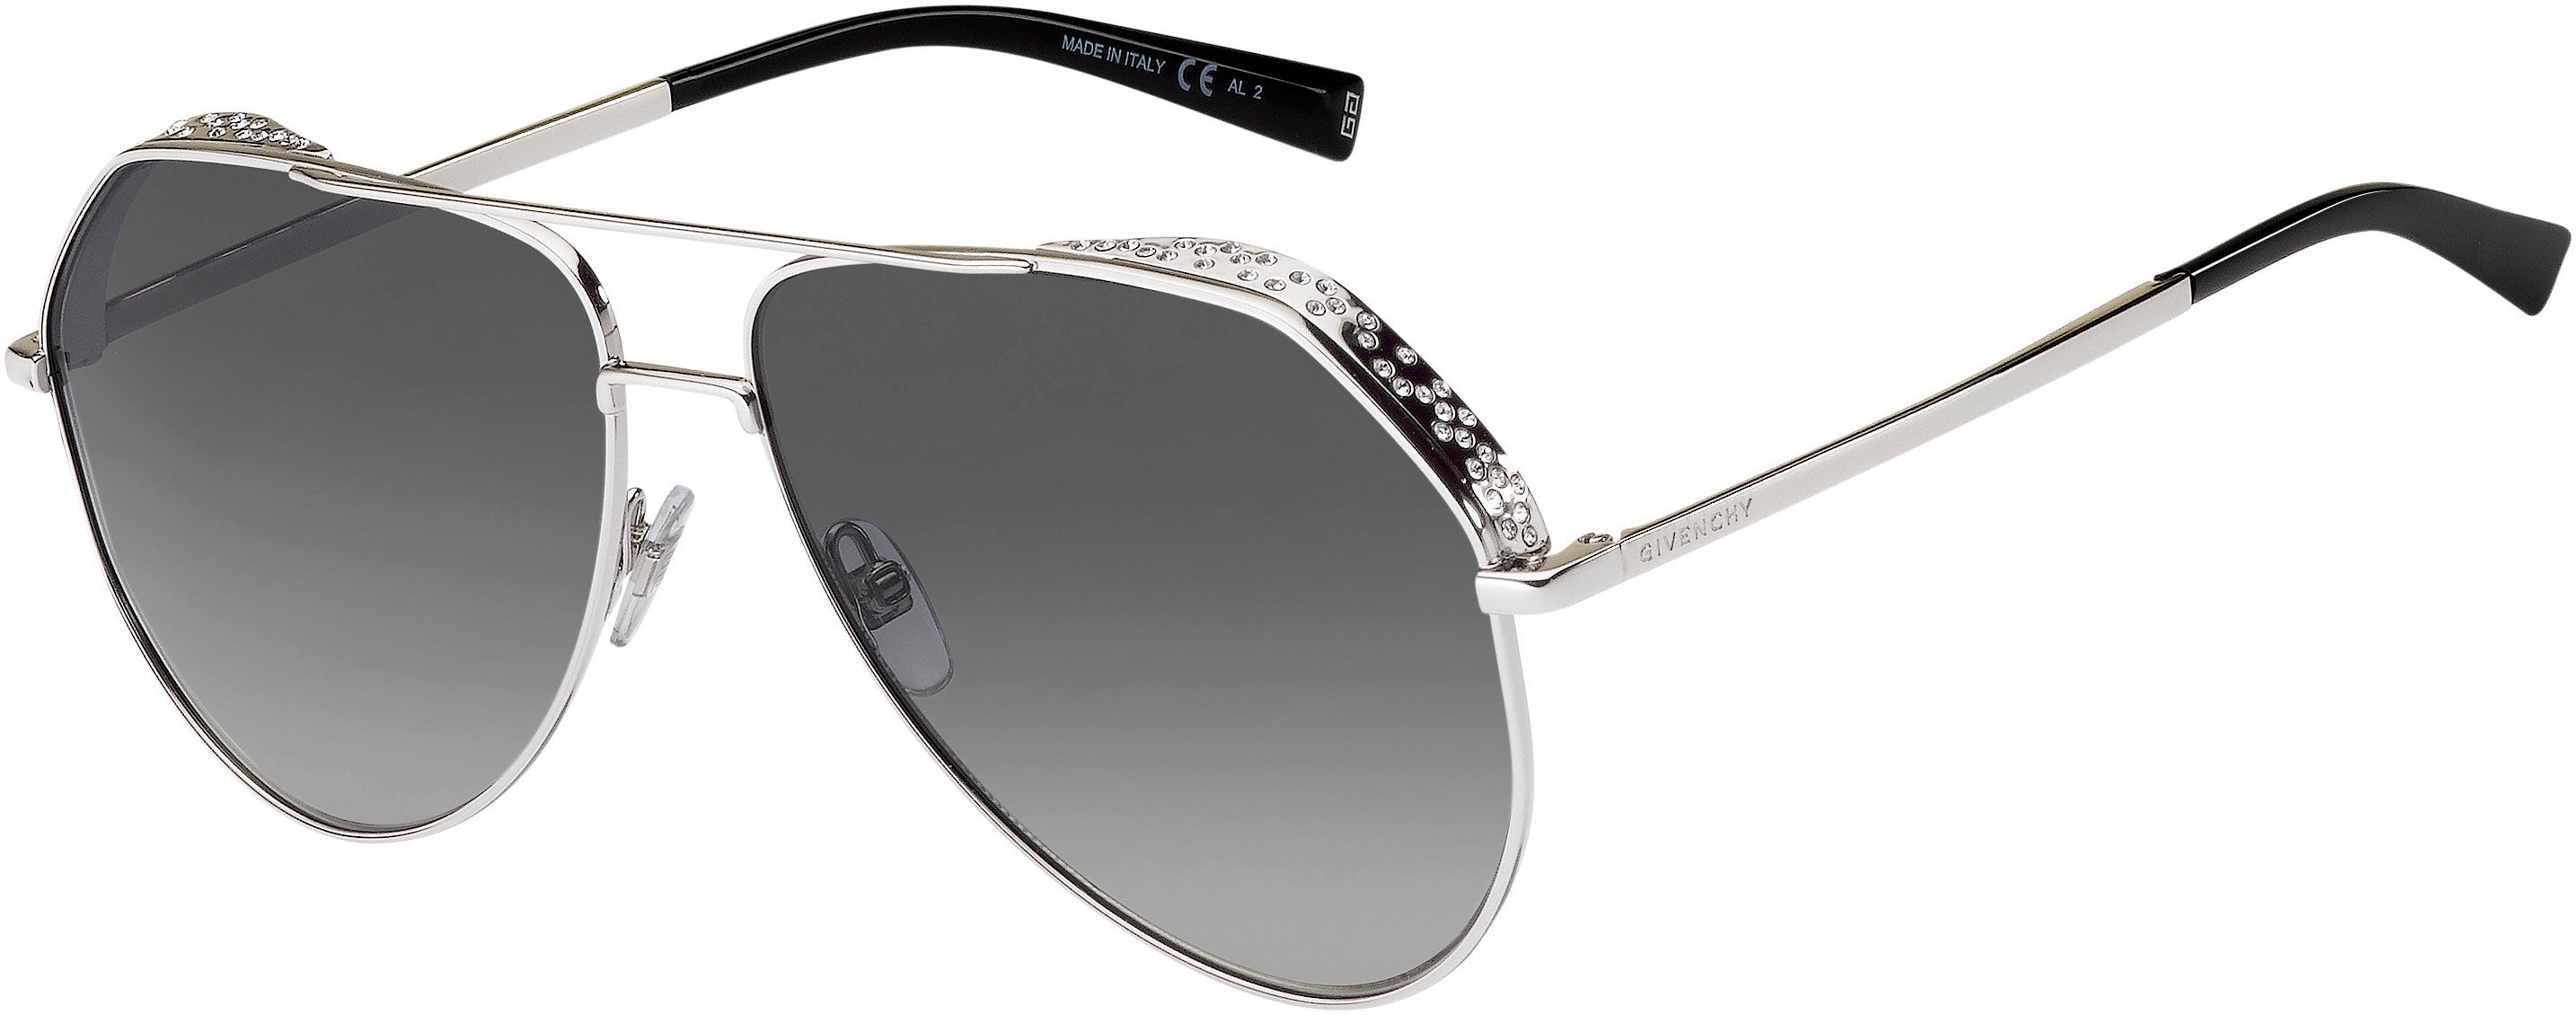  Givenchy 7185/G/S Aviator Sunglasses 0010-0010  Palladium (9O Dark Gray Gradient)